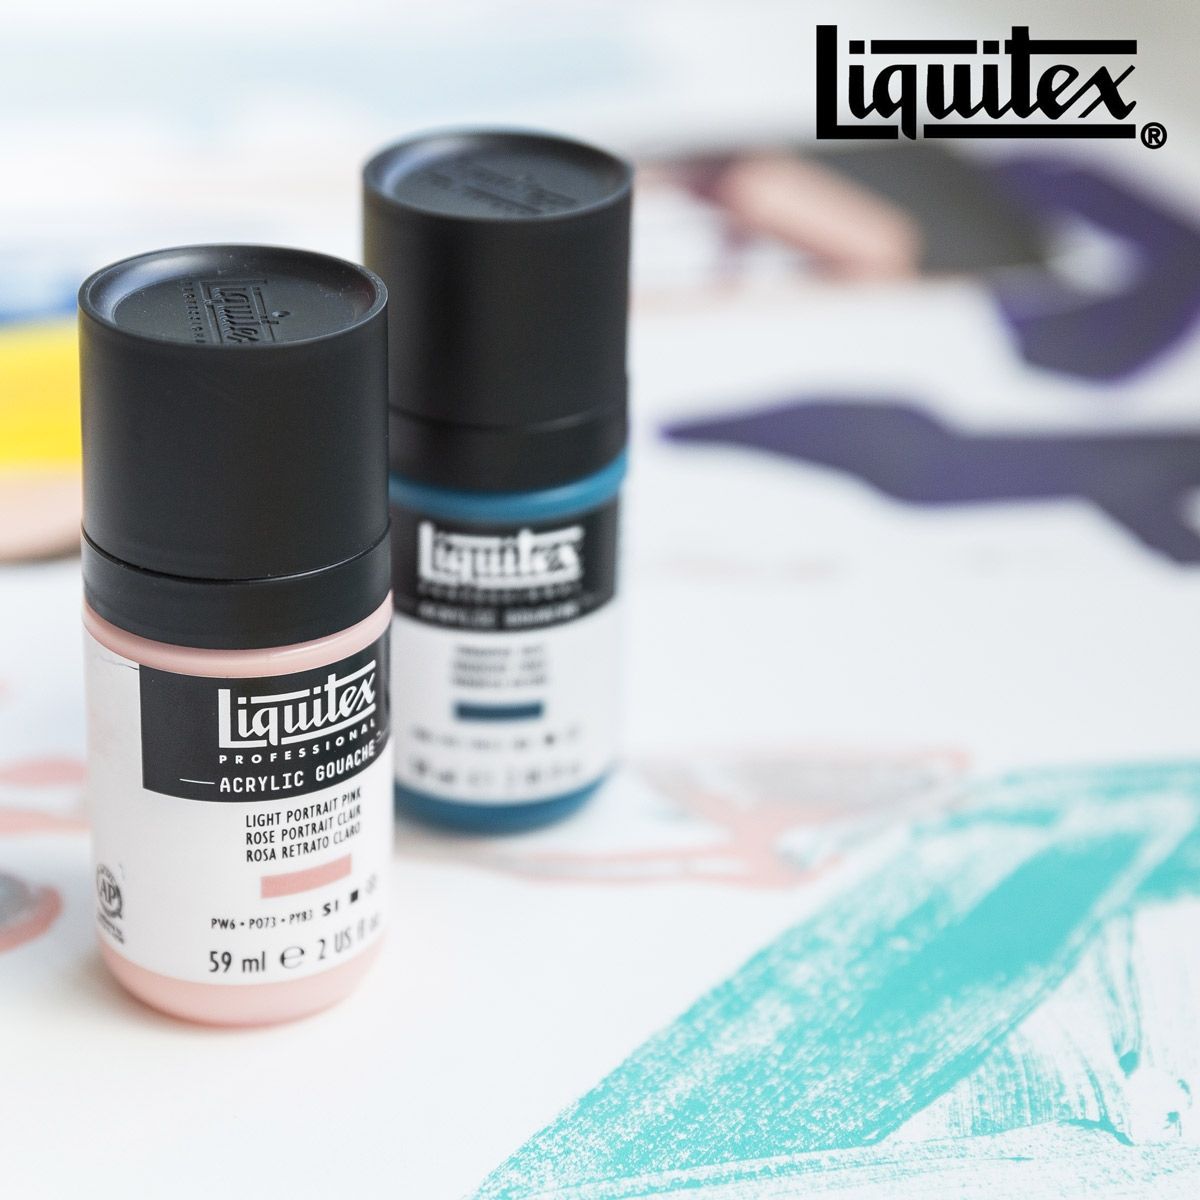 Liquitex : Professional : Acrylic Gouache : 59ml : Titanium White